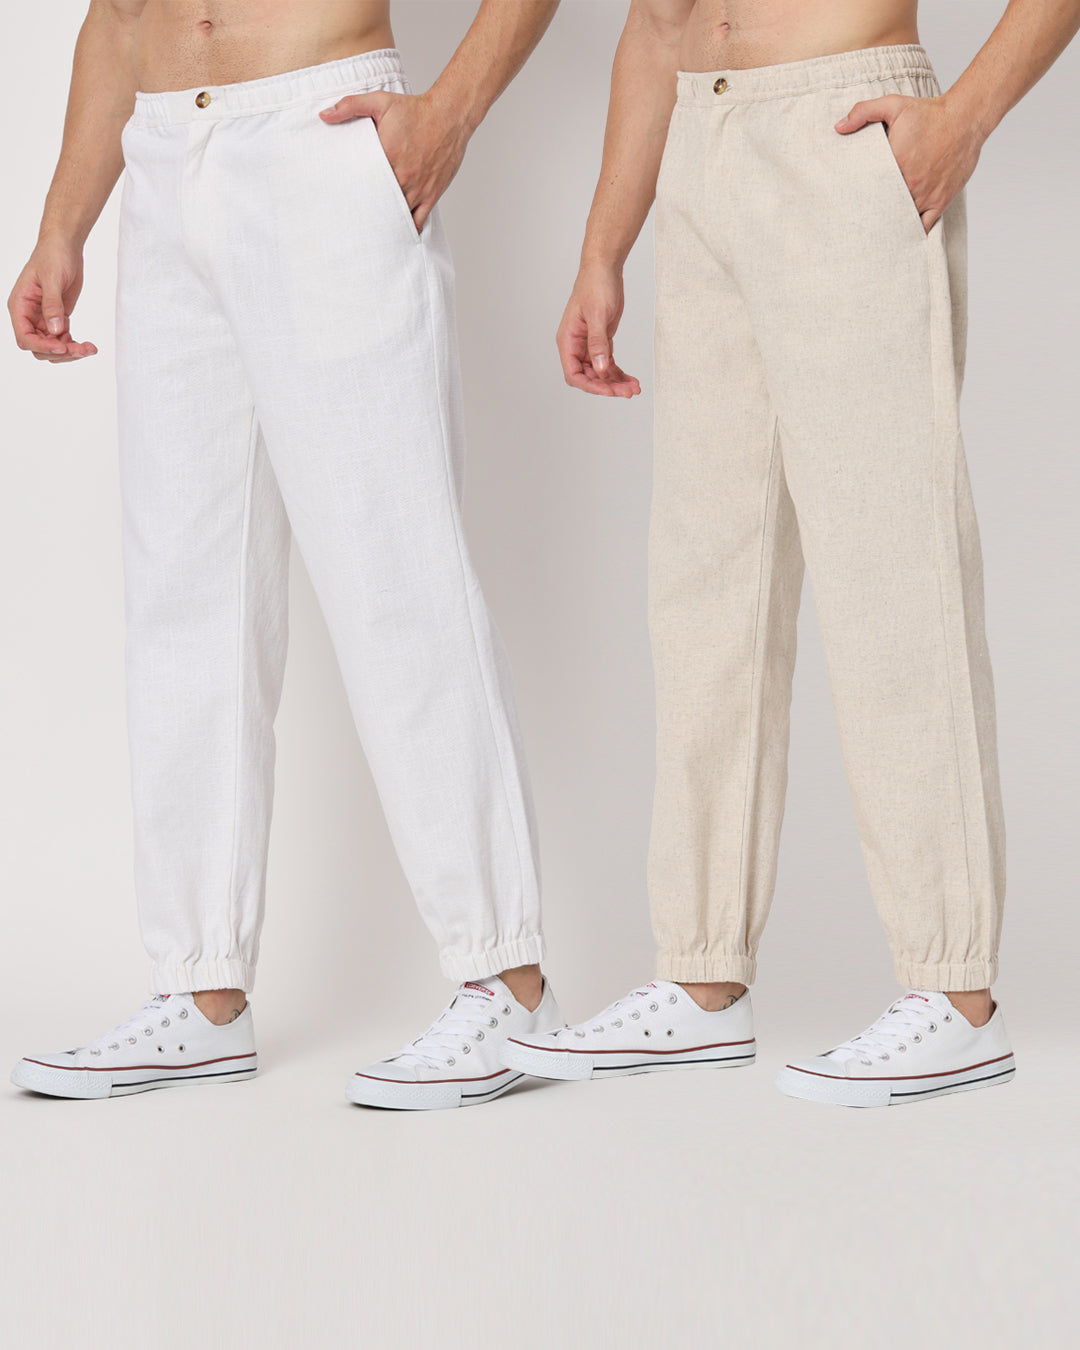 Combo: White & Beige Jog Men's Pants - Set of 2